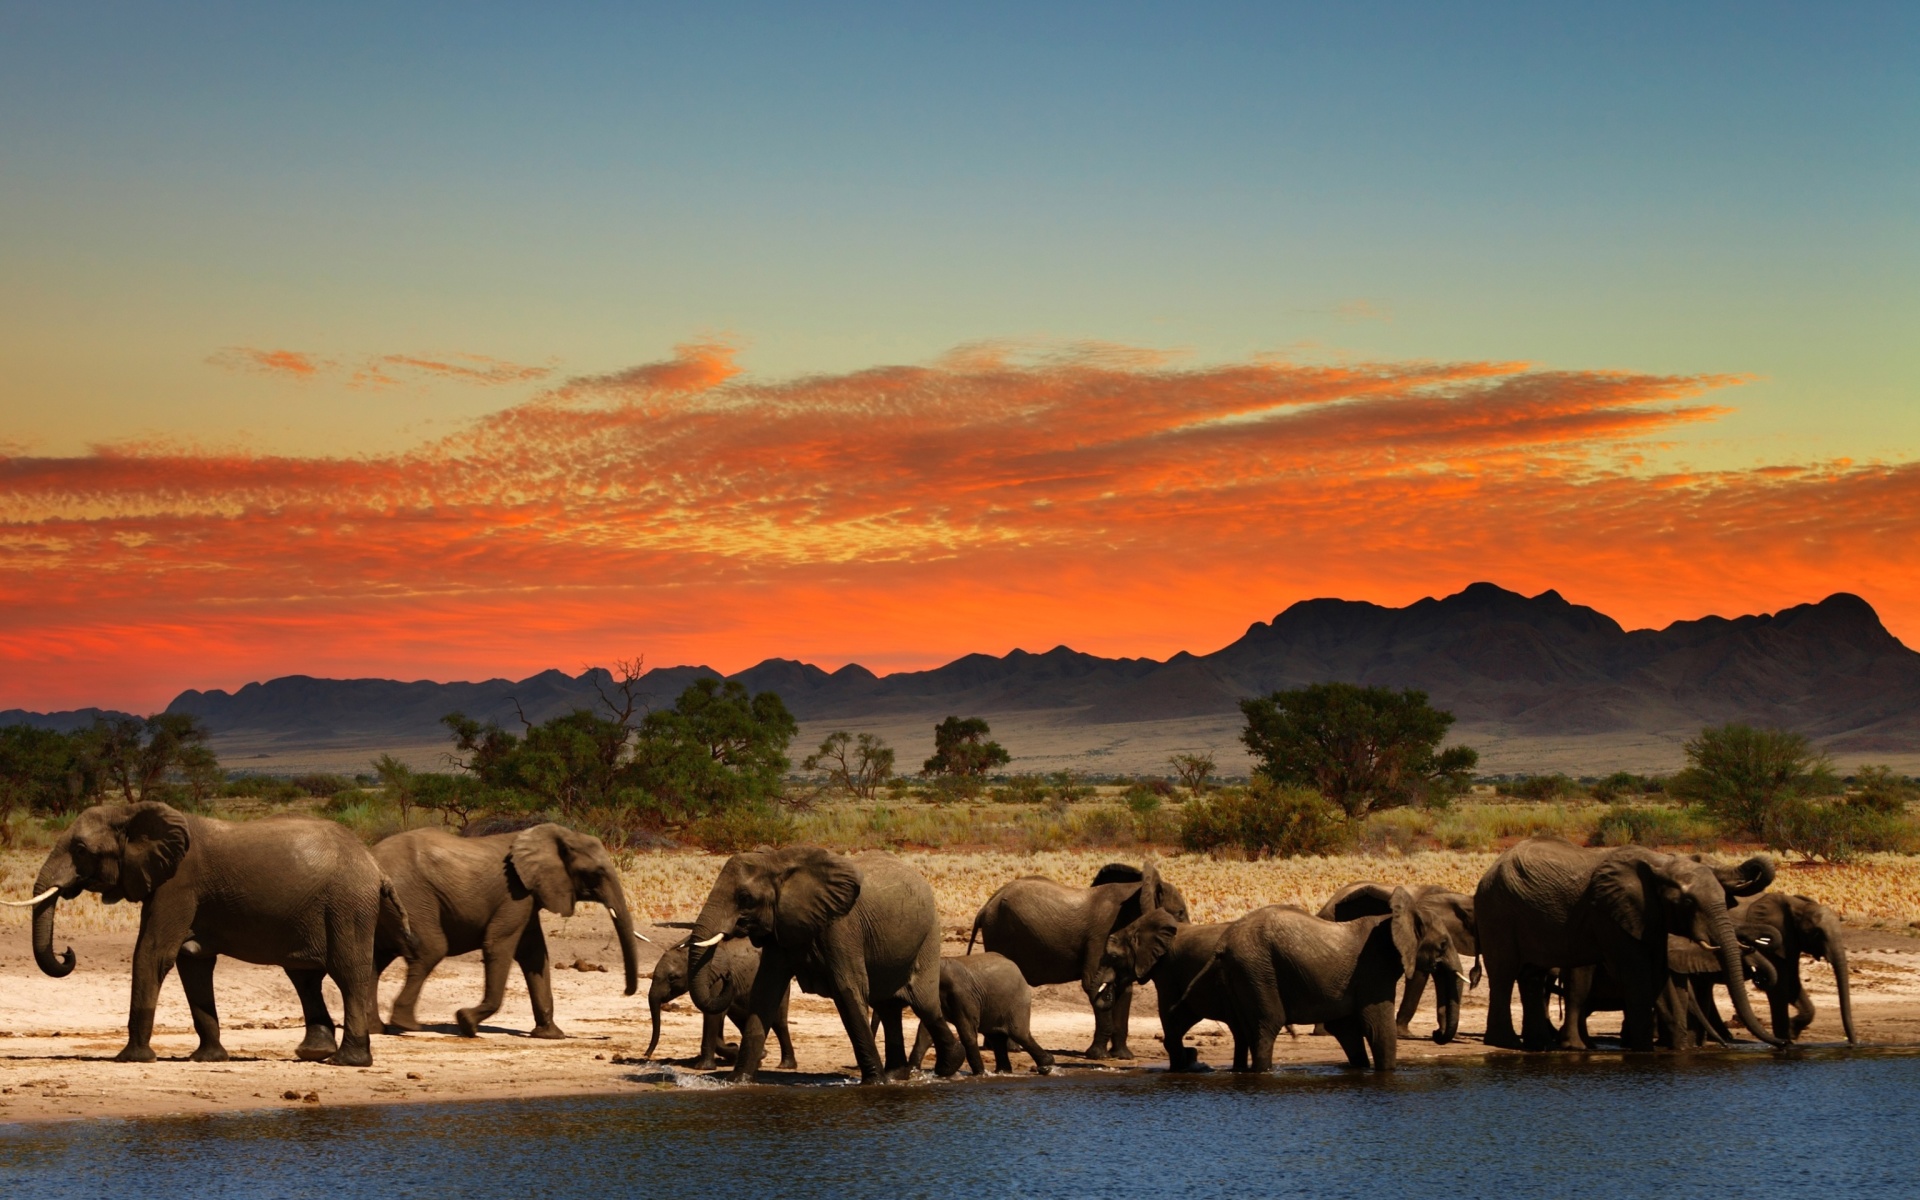 Das Herd of elephants Safari Wallpaper 1920x1200